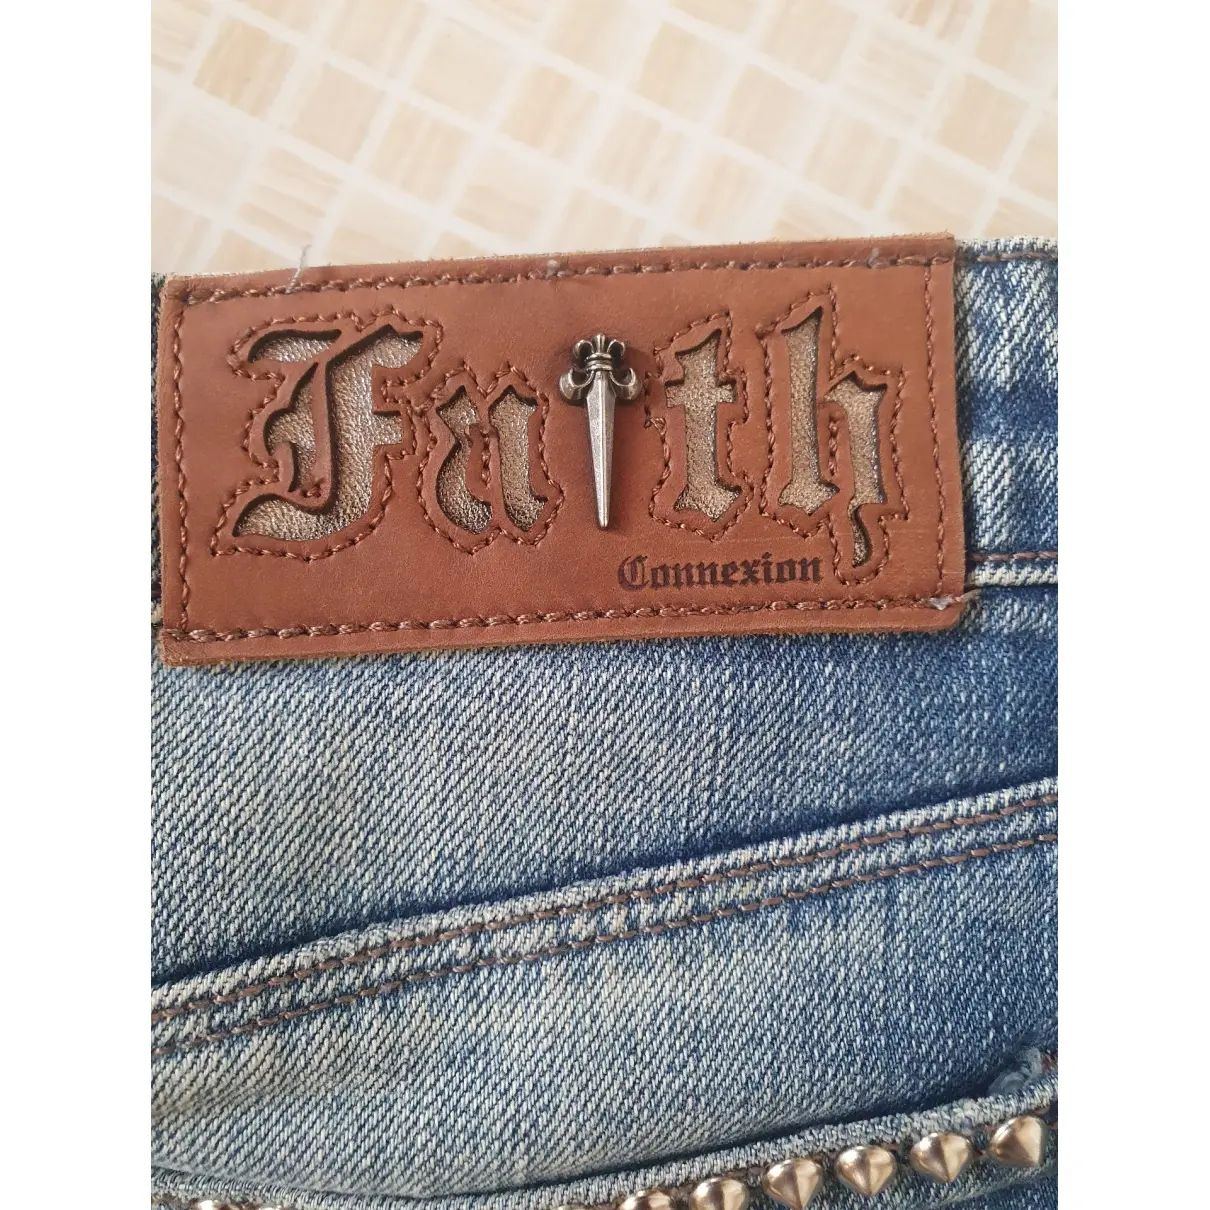 Luxury Faith Connexion Skirts Women